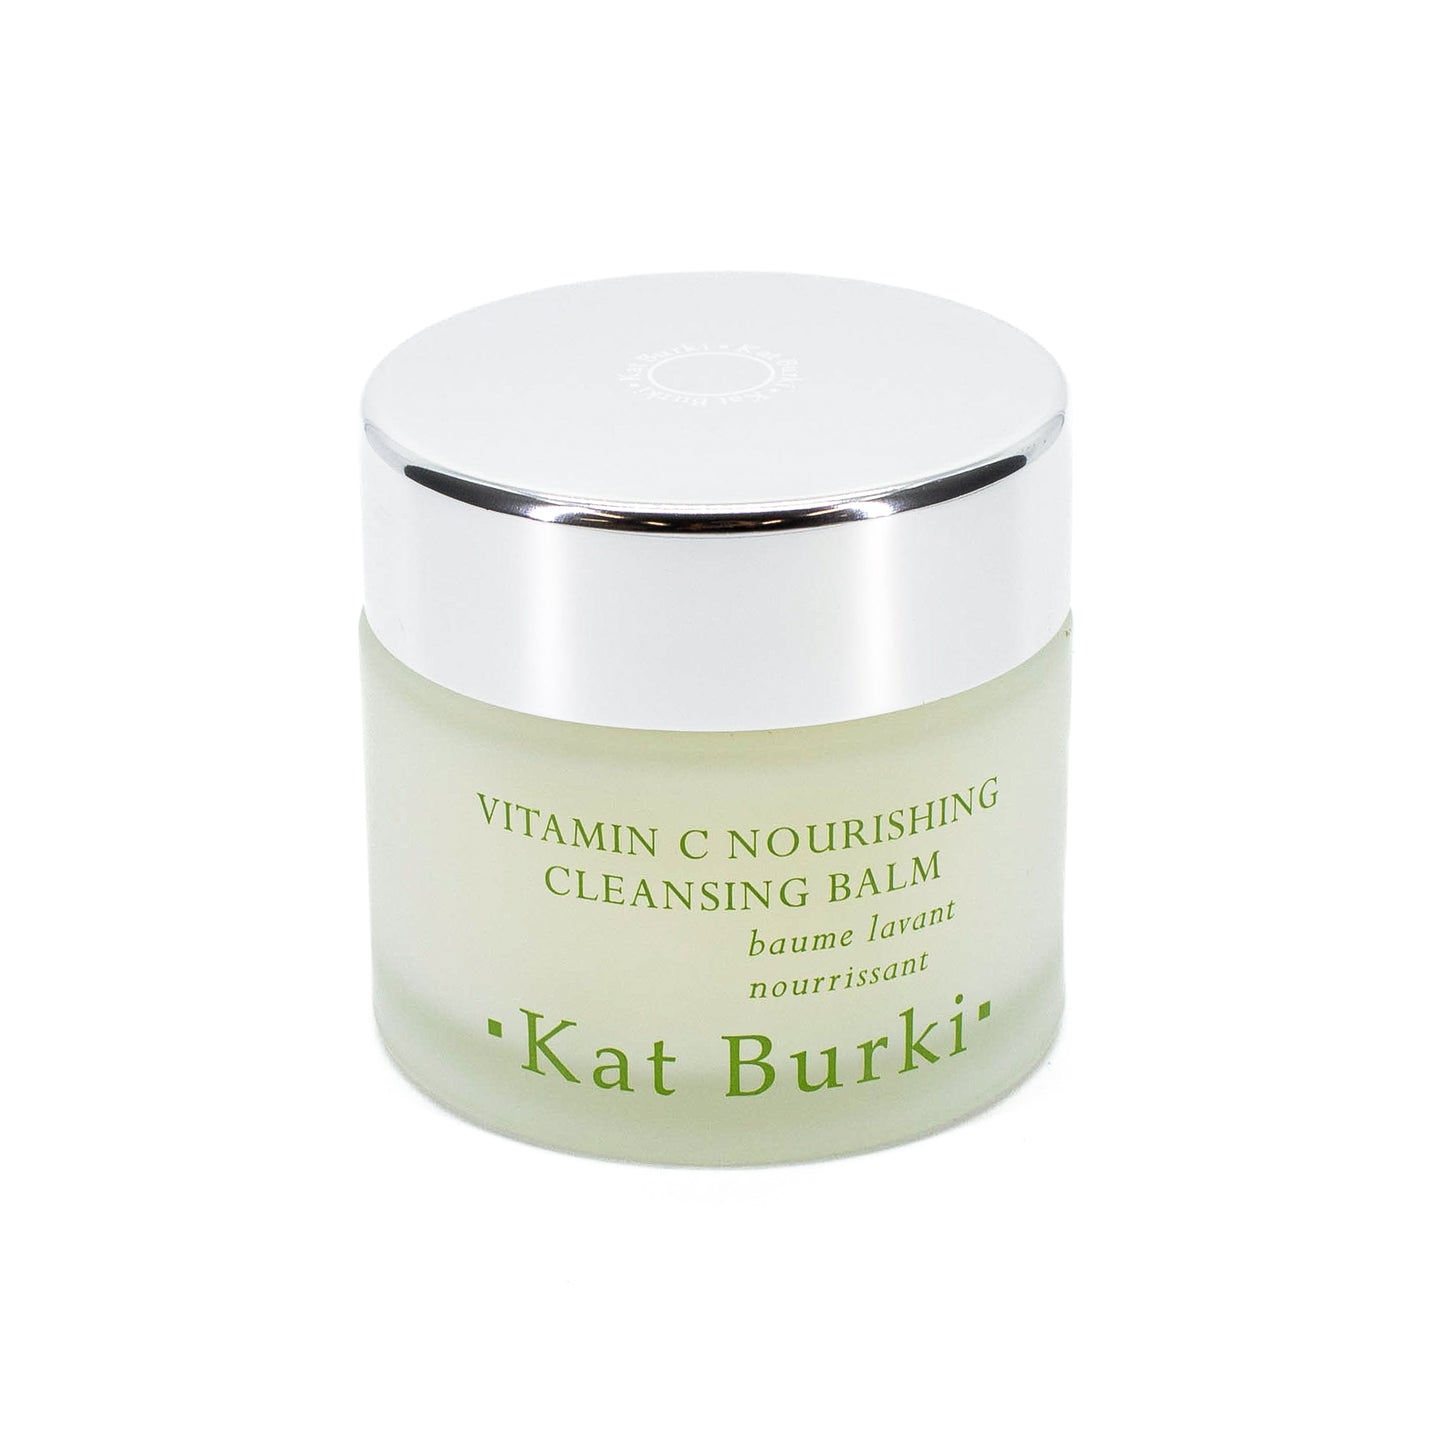 Kat Burki Vitamin C Nourishing Cleansing Balm 2oz - Imperfect Box